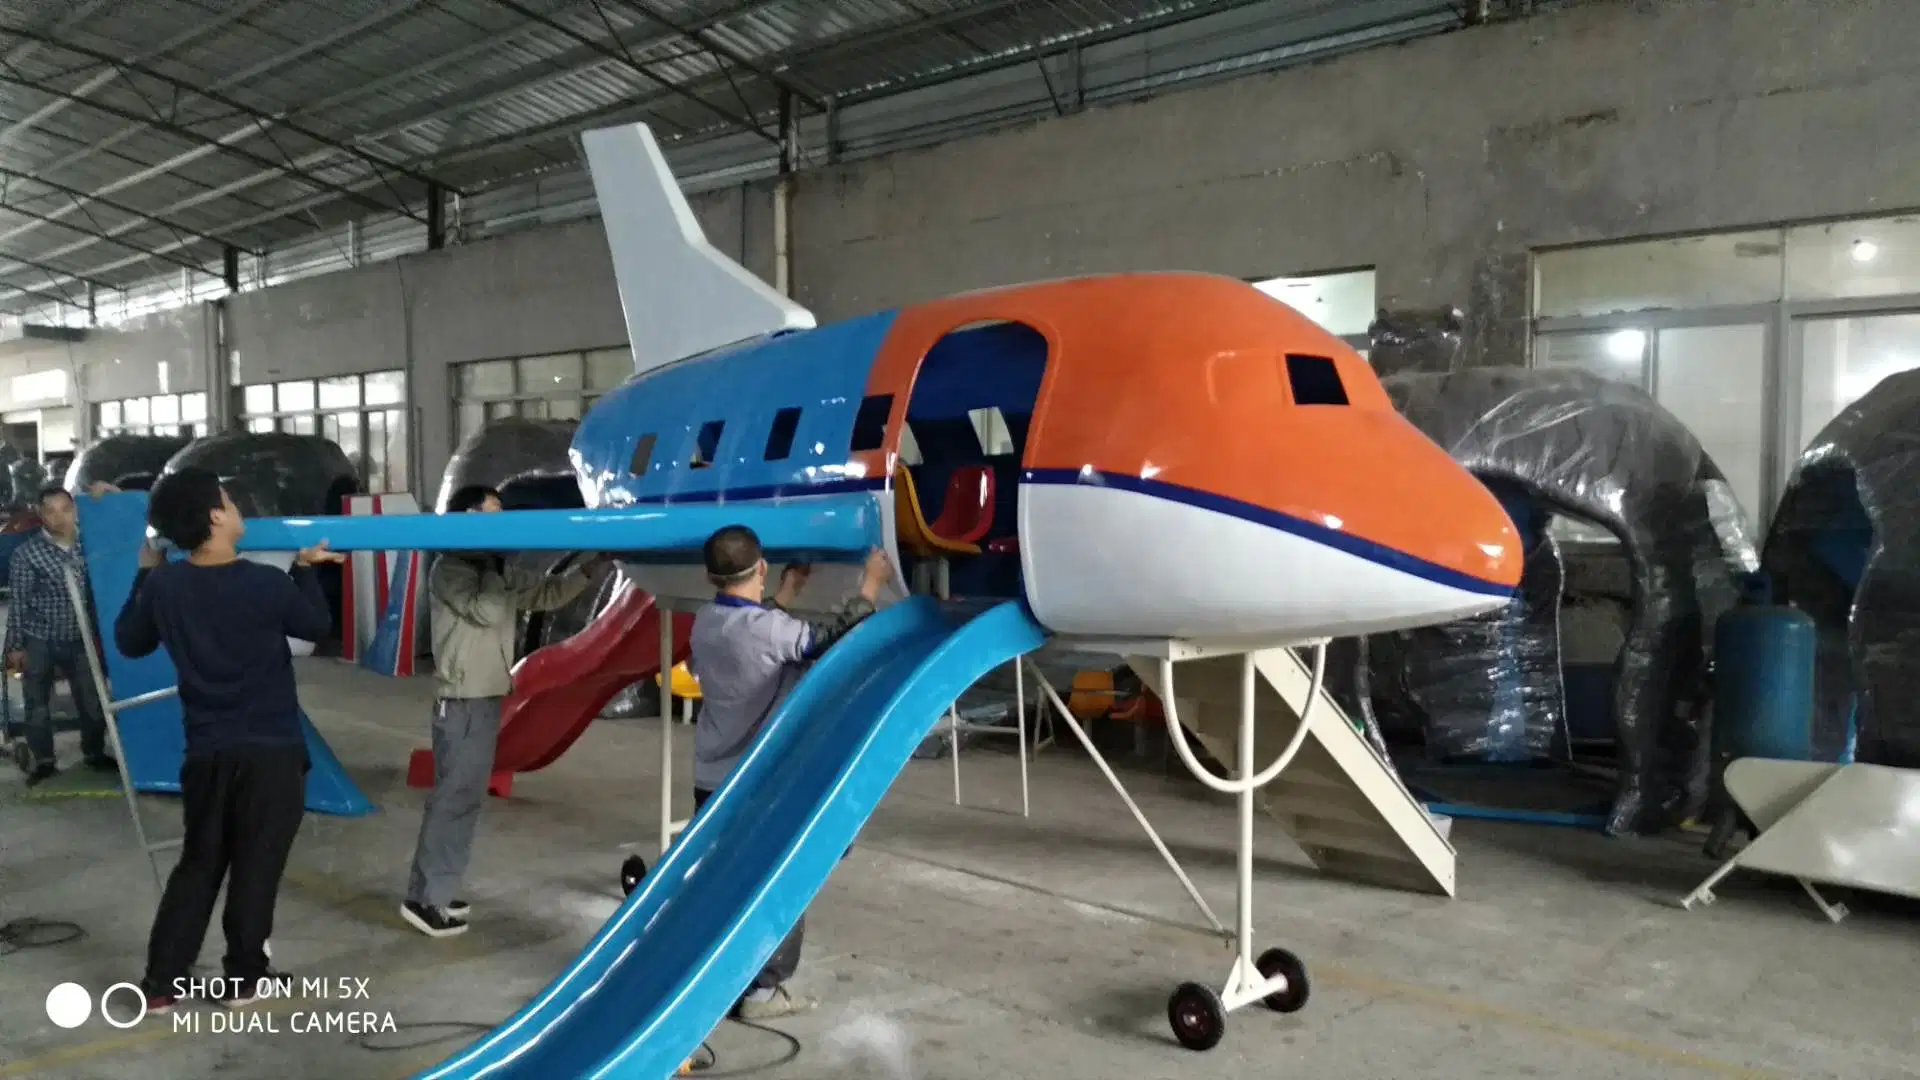 Large Scale Fiberglass Airplane Toy